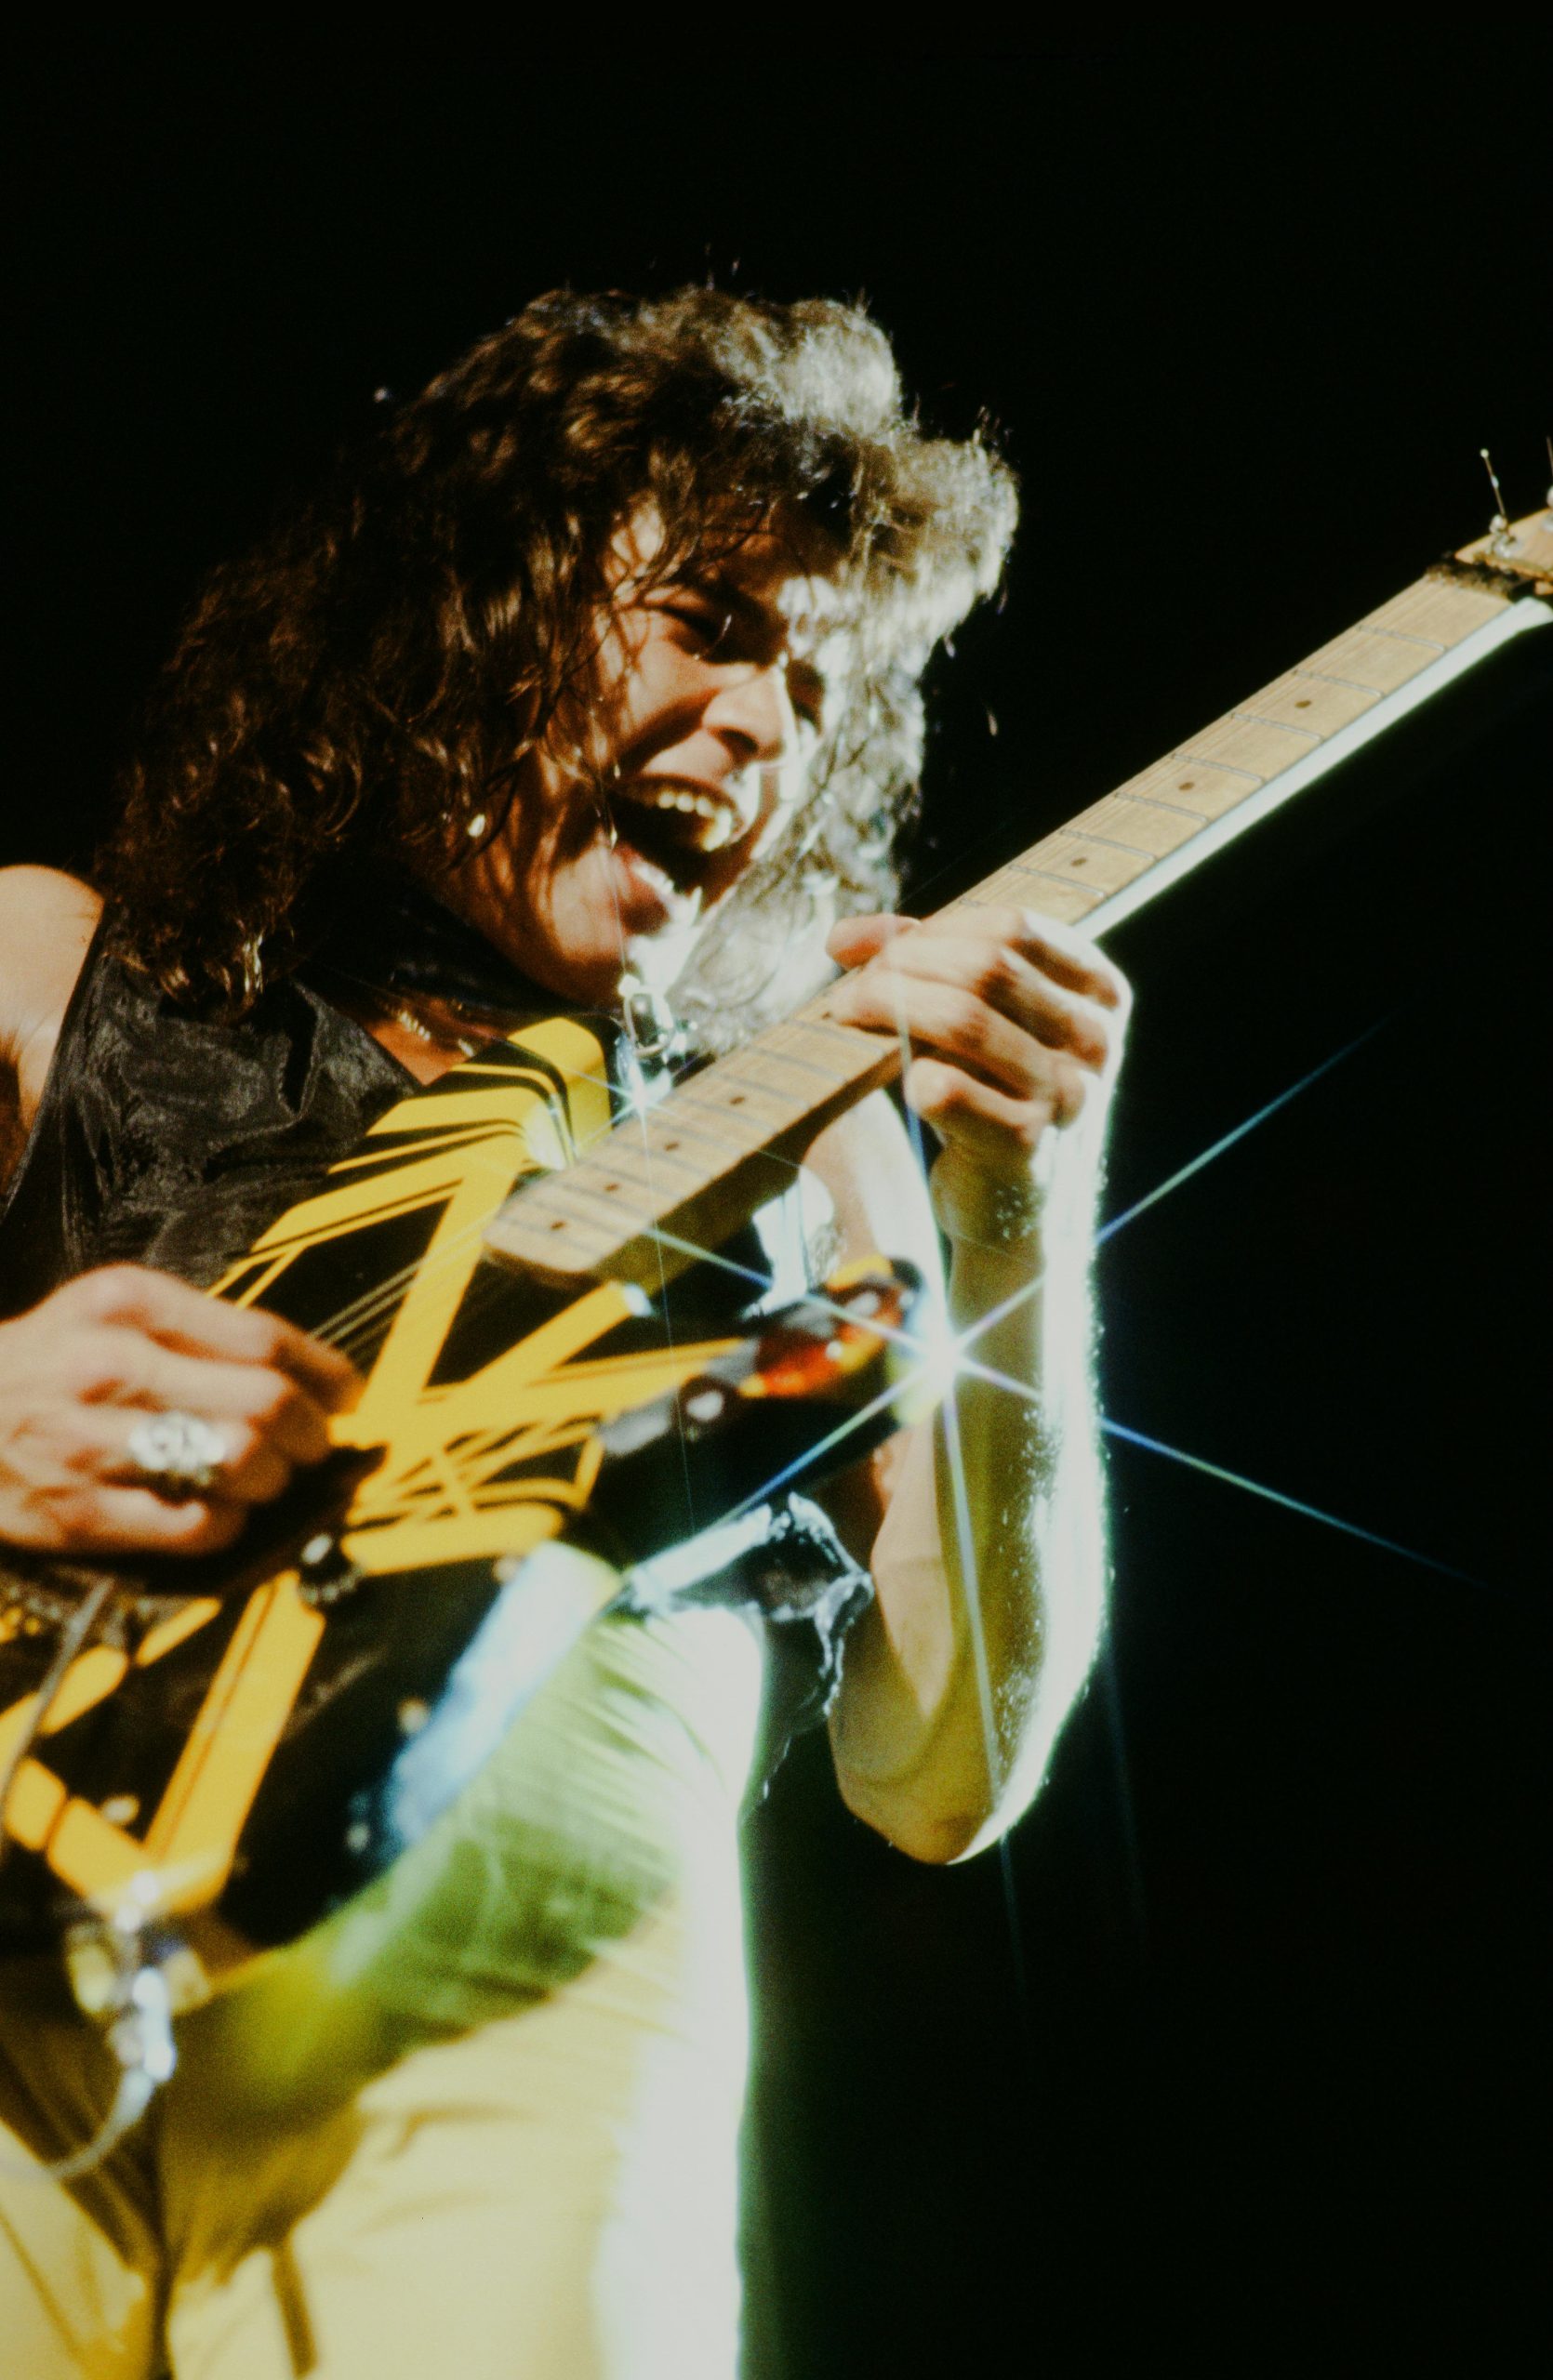 Frankenstrat: Esta es la historia de la curiosa guitarra de Eddie Van Halen